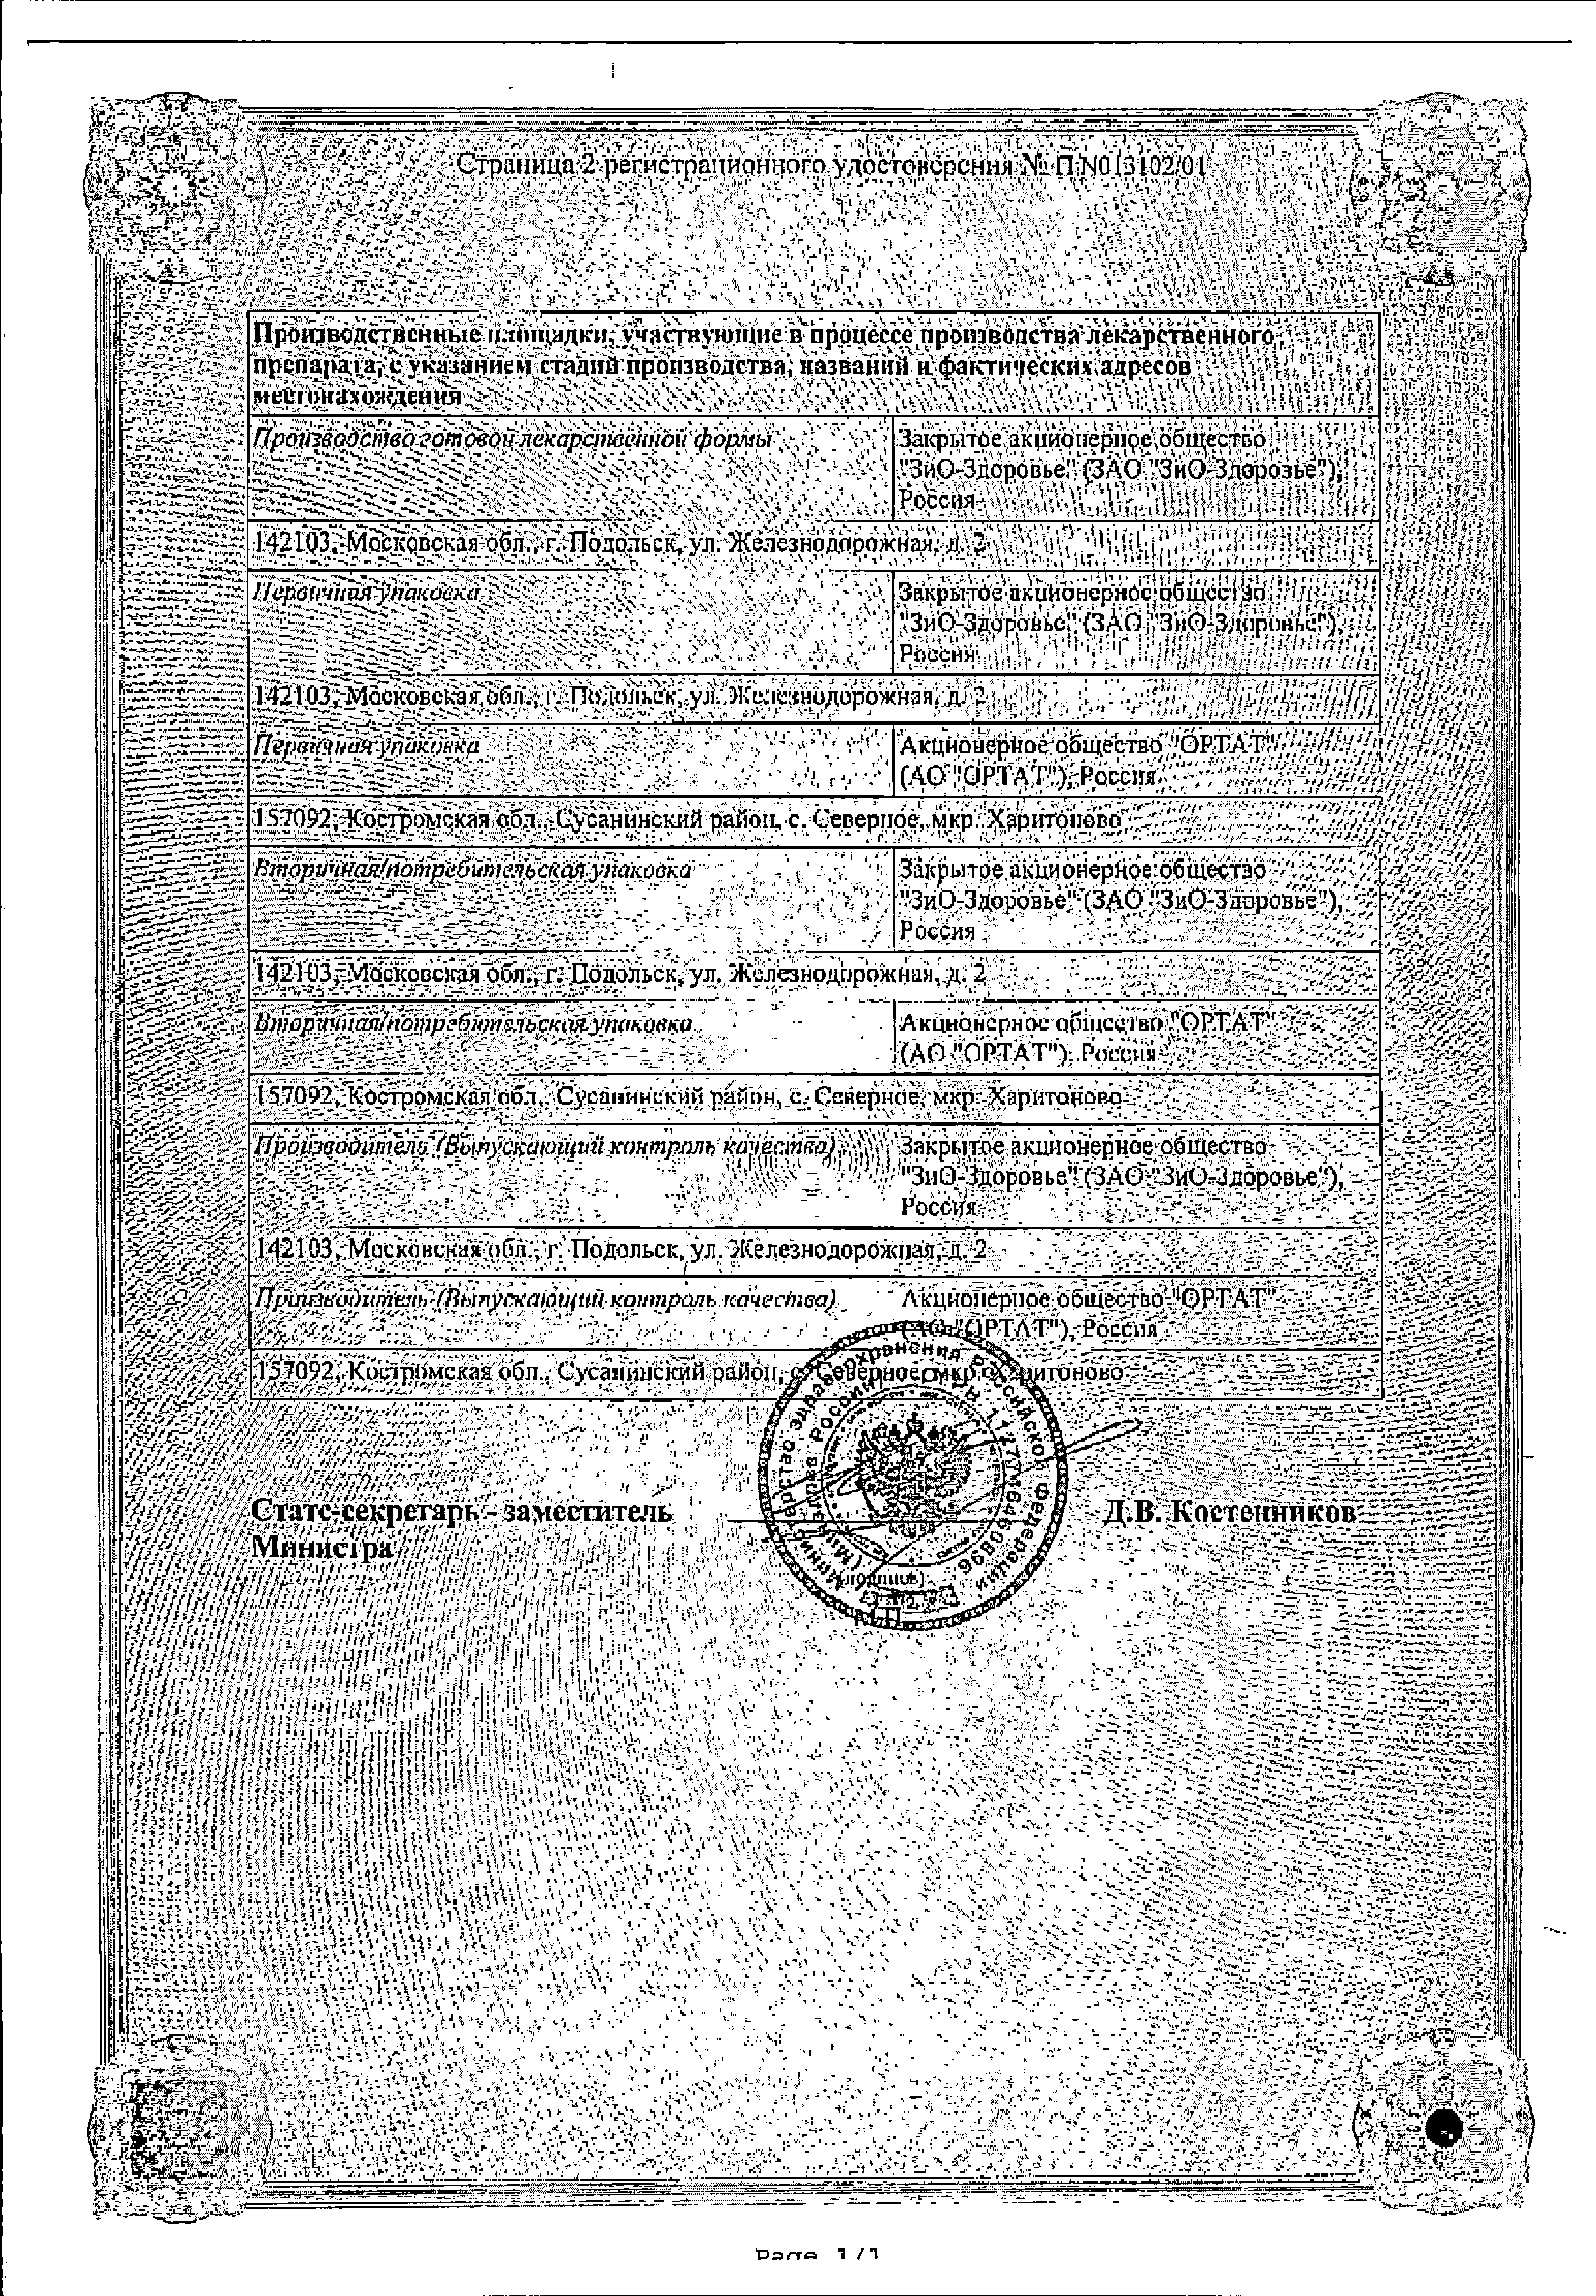 Юнидокс Солютаб сертификат